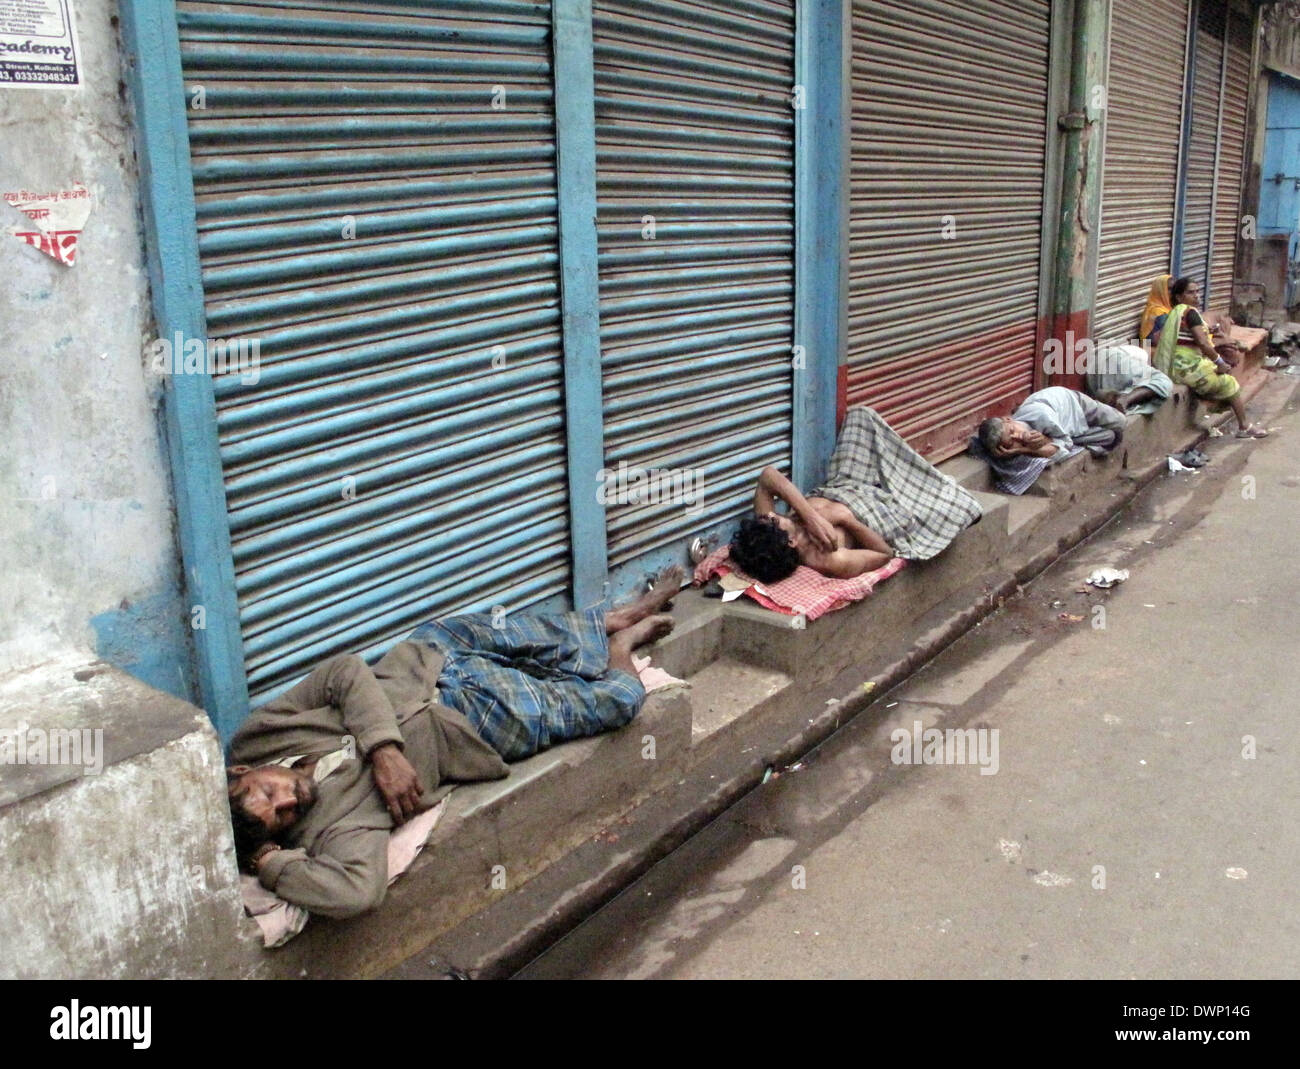 Streets of Kolkata, man sleeping on the streets of Kolkata,India on January 25, 2009. Stock Photo